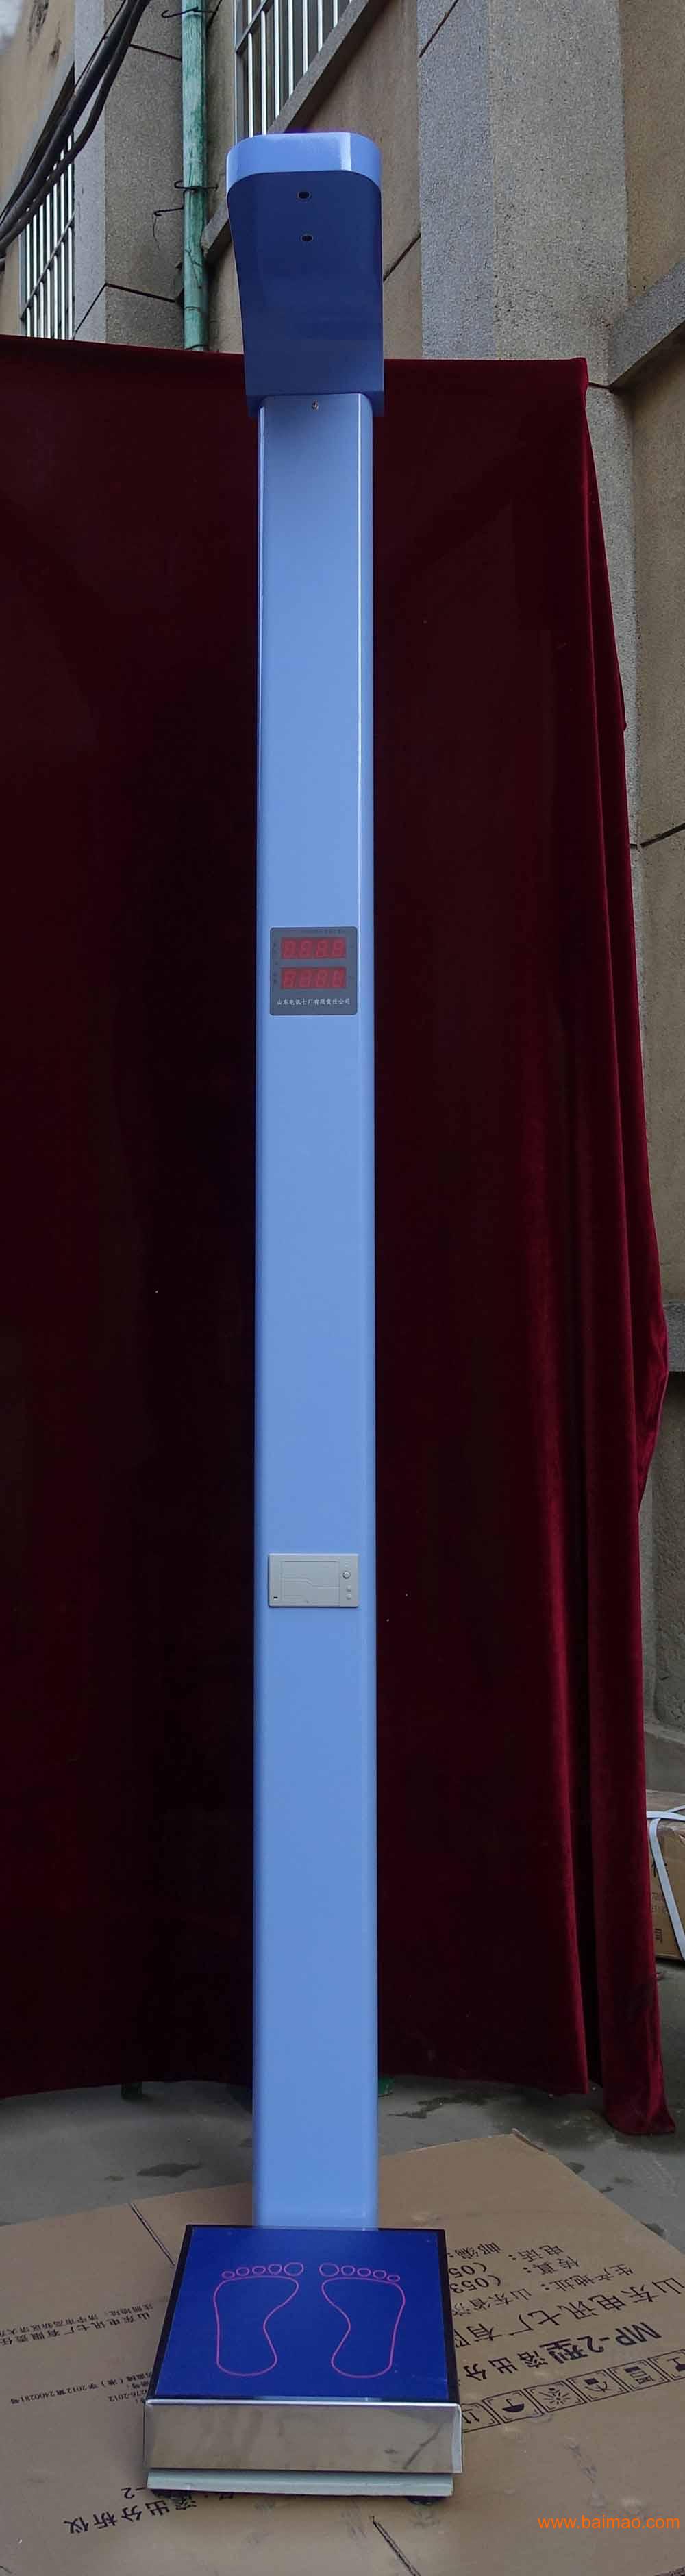 RTCS-150-A超声波人体身高体重测量仪